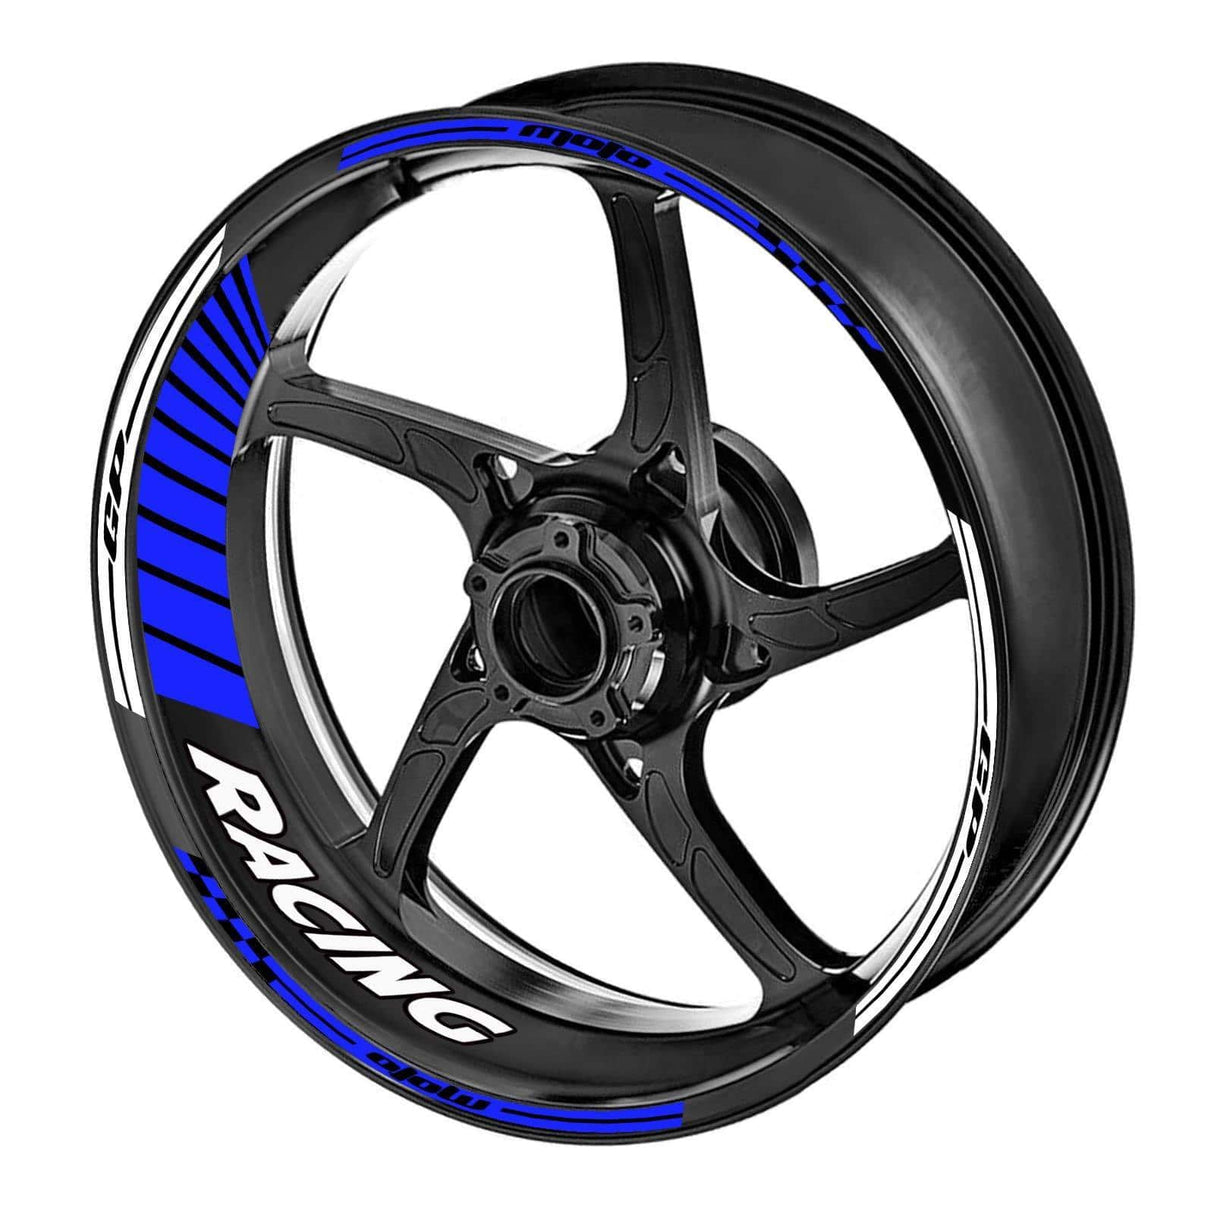 StickerBao Blue 17 inch GP04 Platinum Inner Edge Rim Sticker Universal Motorcycle Rim Wheel Decal Racing For Honda